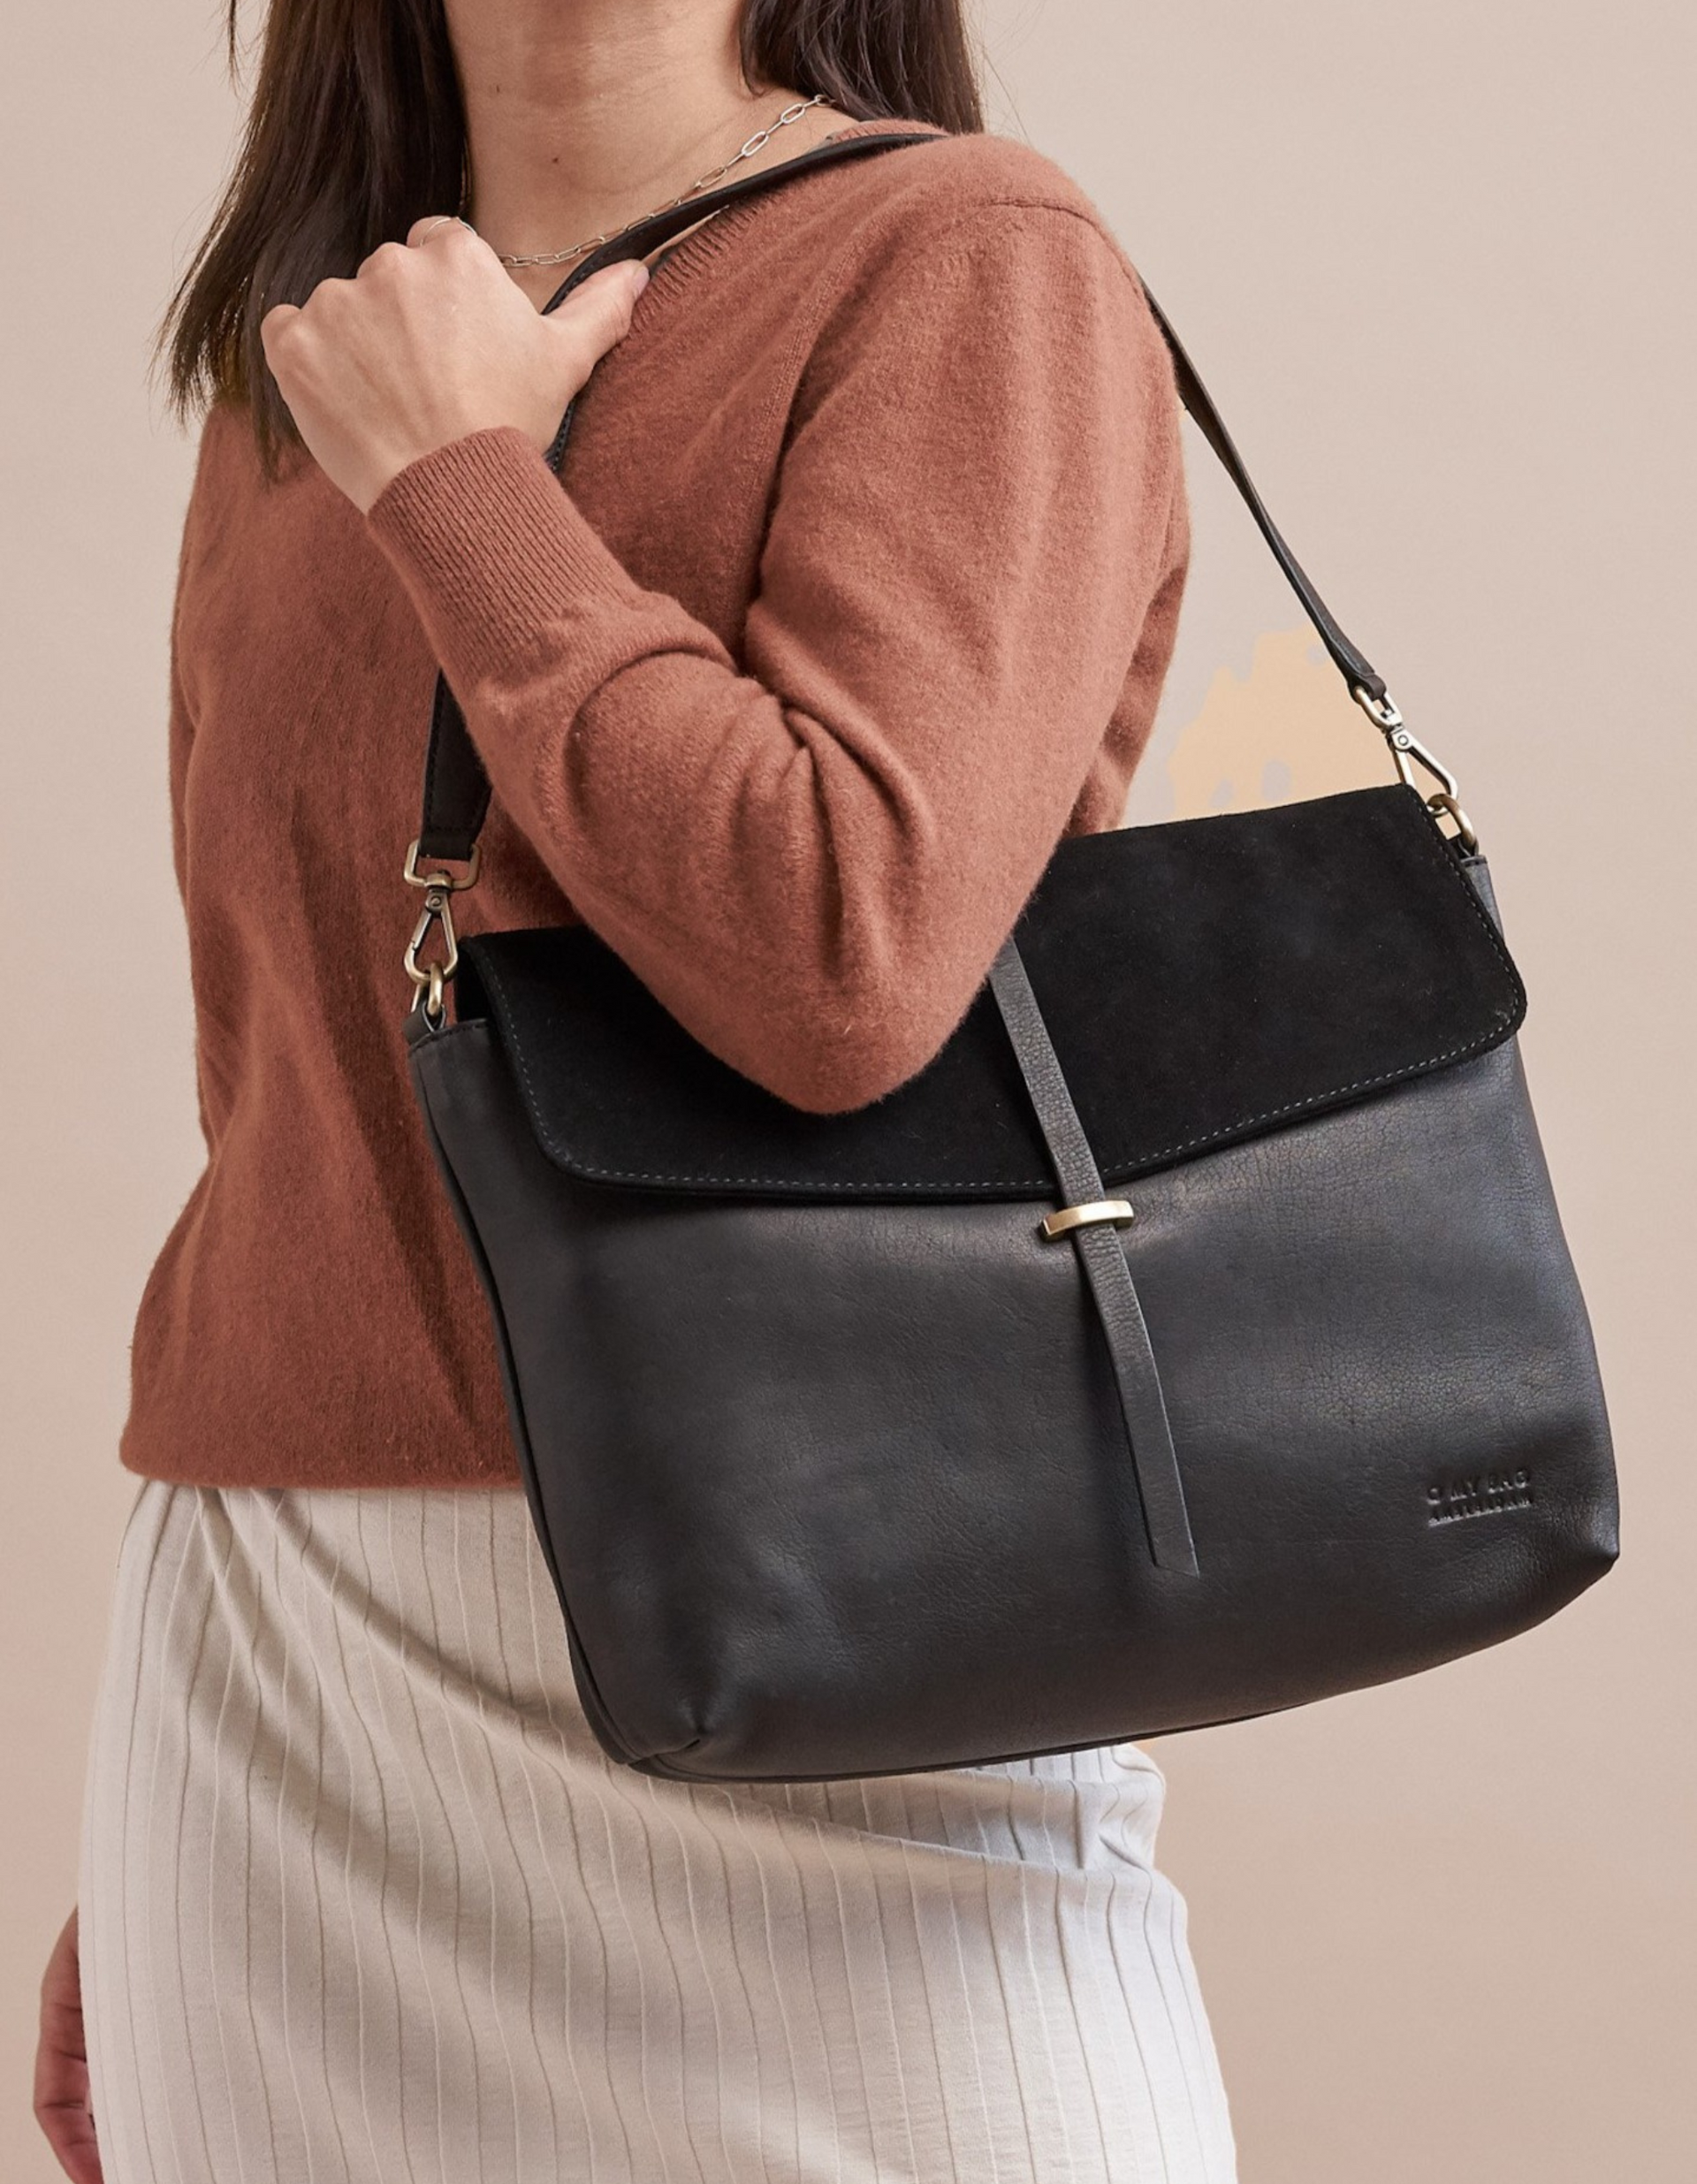 Black Soft Grain & Suede leather womens handbag. Square shape with short adjustable strap. Model product image.